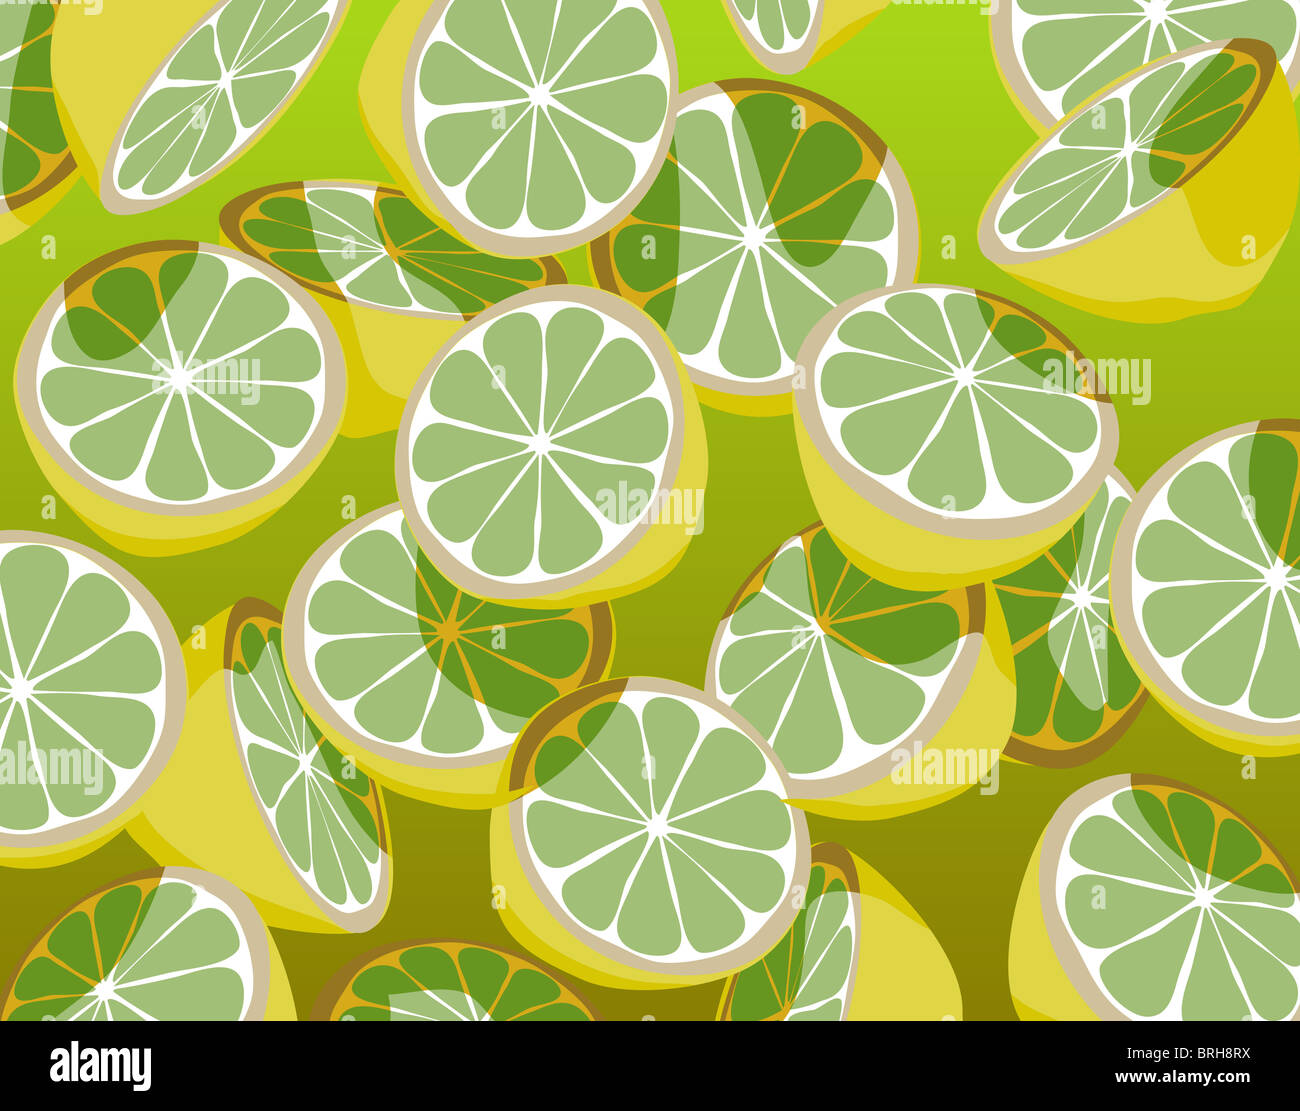 Abbildung des Fallens in Scheiben geschnittenen grünen Zitronen Stockfoto